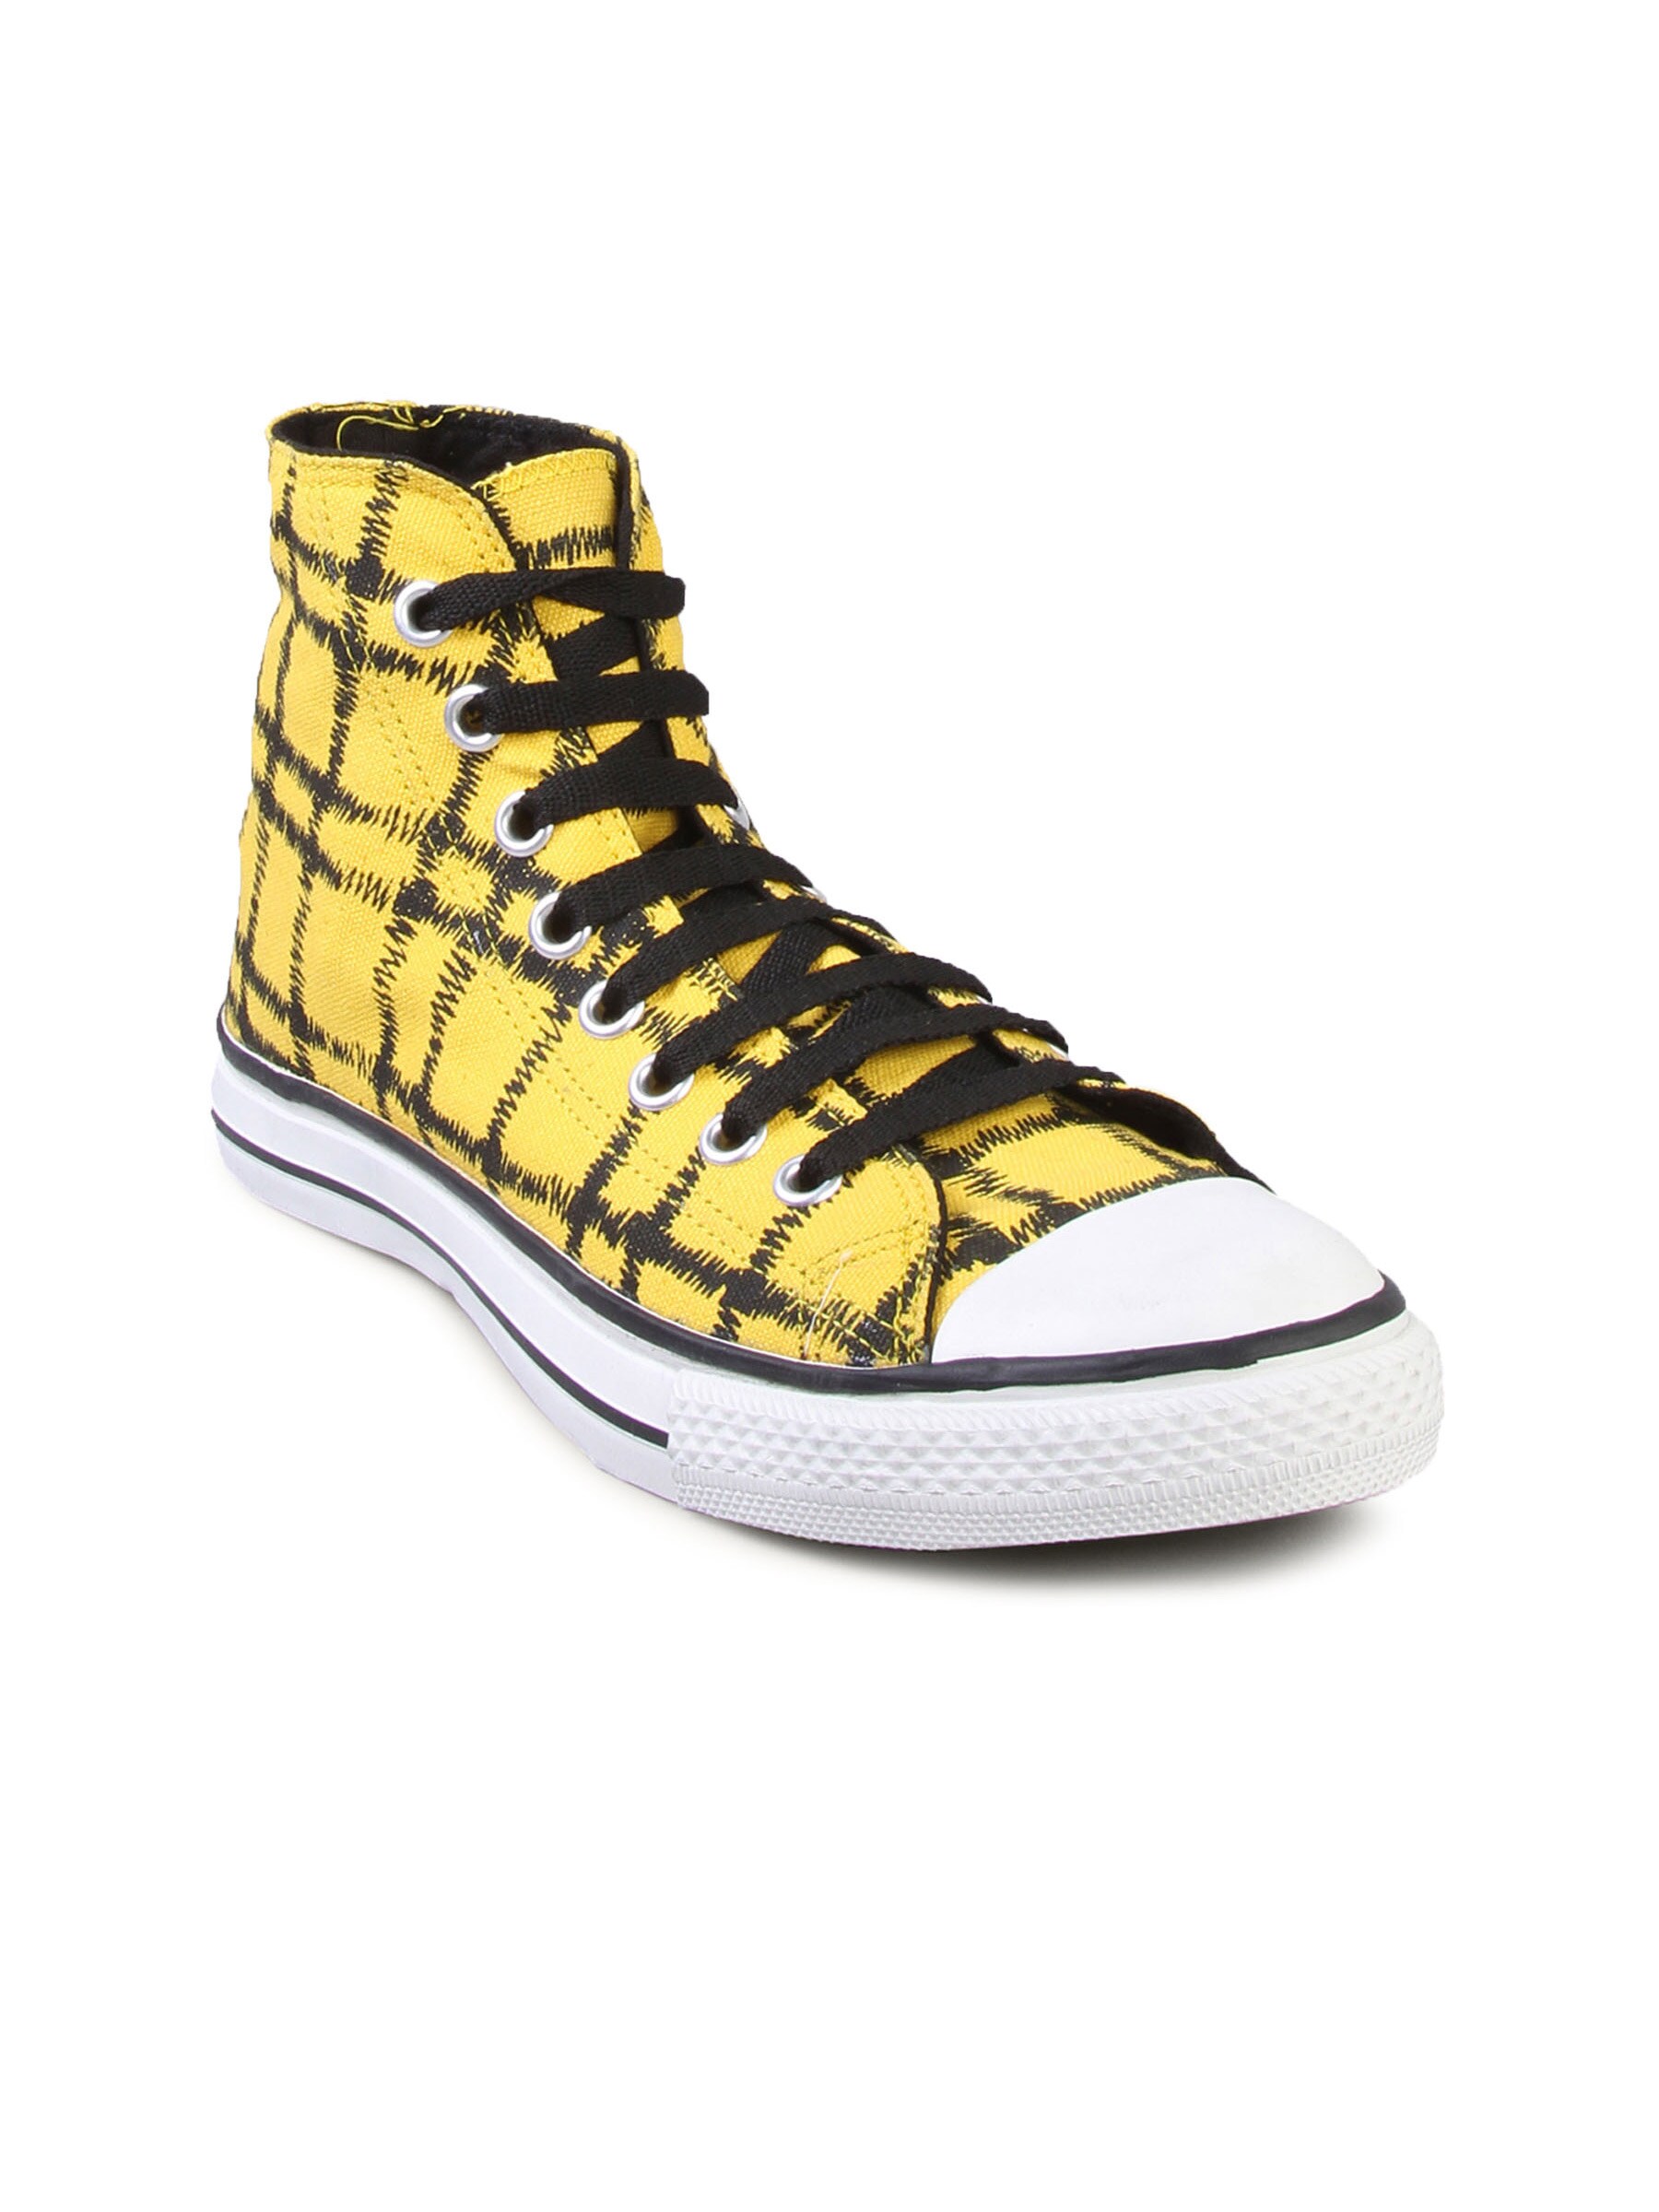 Converse Unisex CT Stitch Print HI Yellow Canvas Shoe